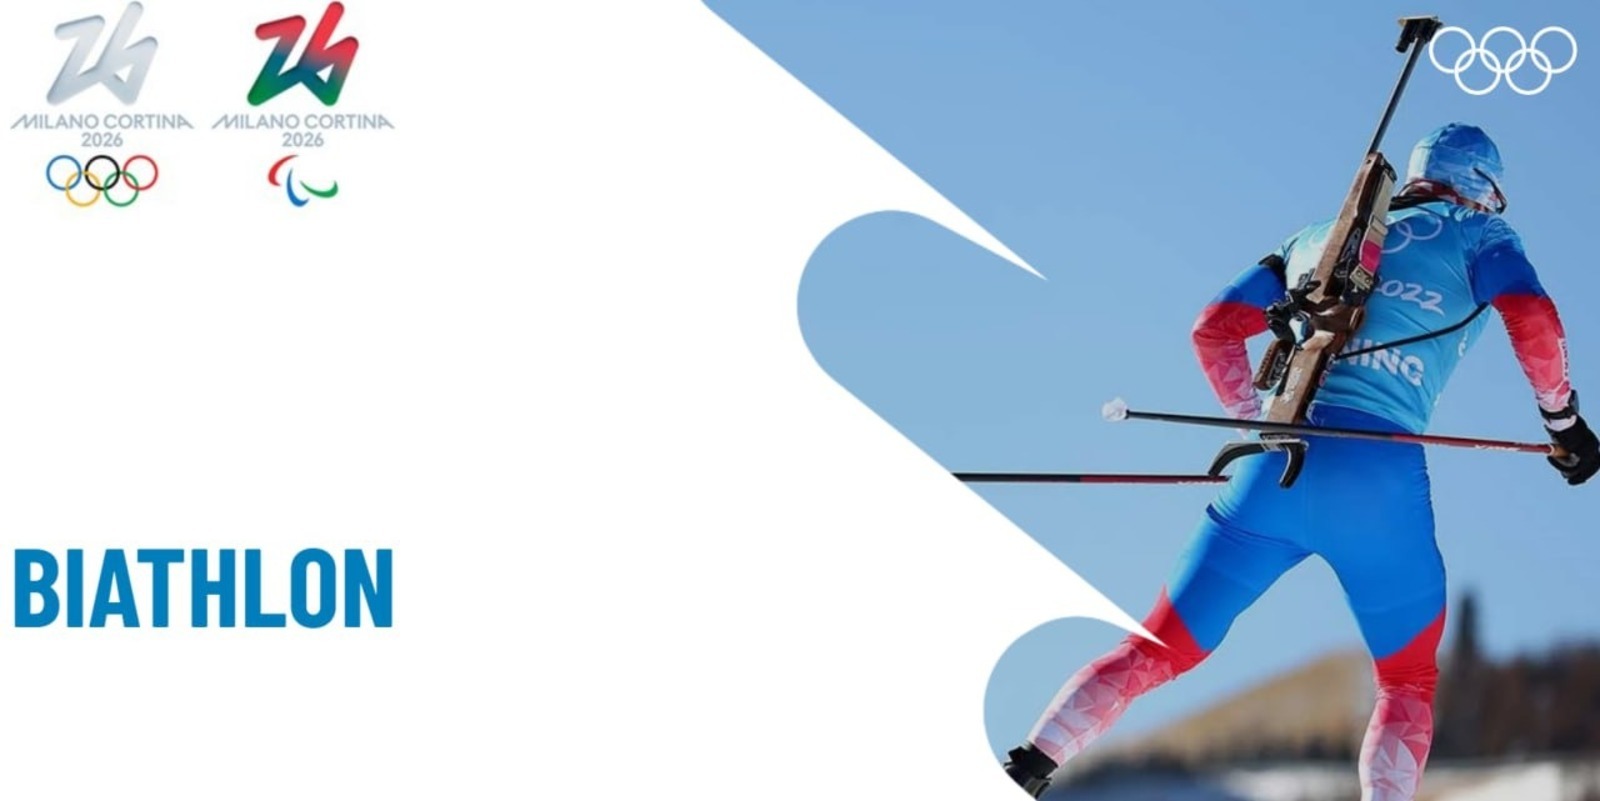 Биатлонист из Башкирии Эдуард Латыпов попал на обложку зимних Олимпийских игр - 2026